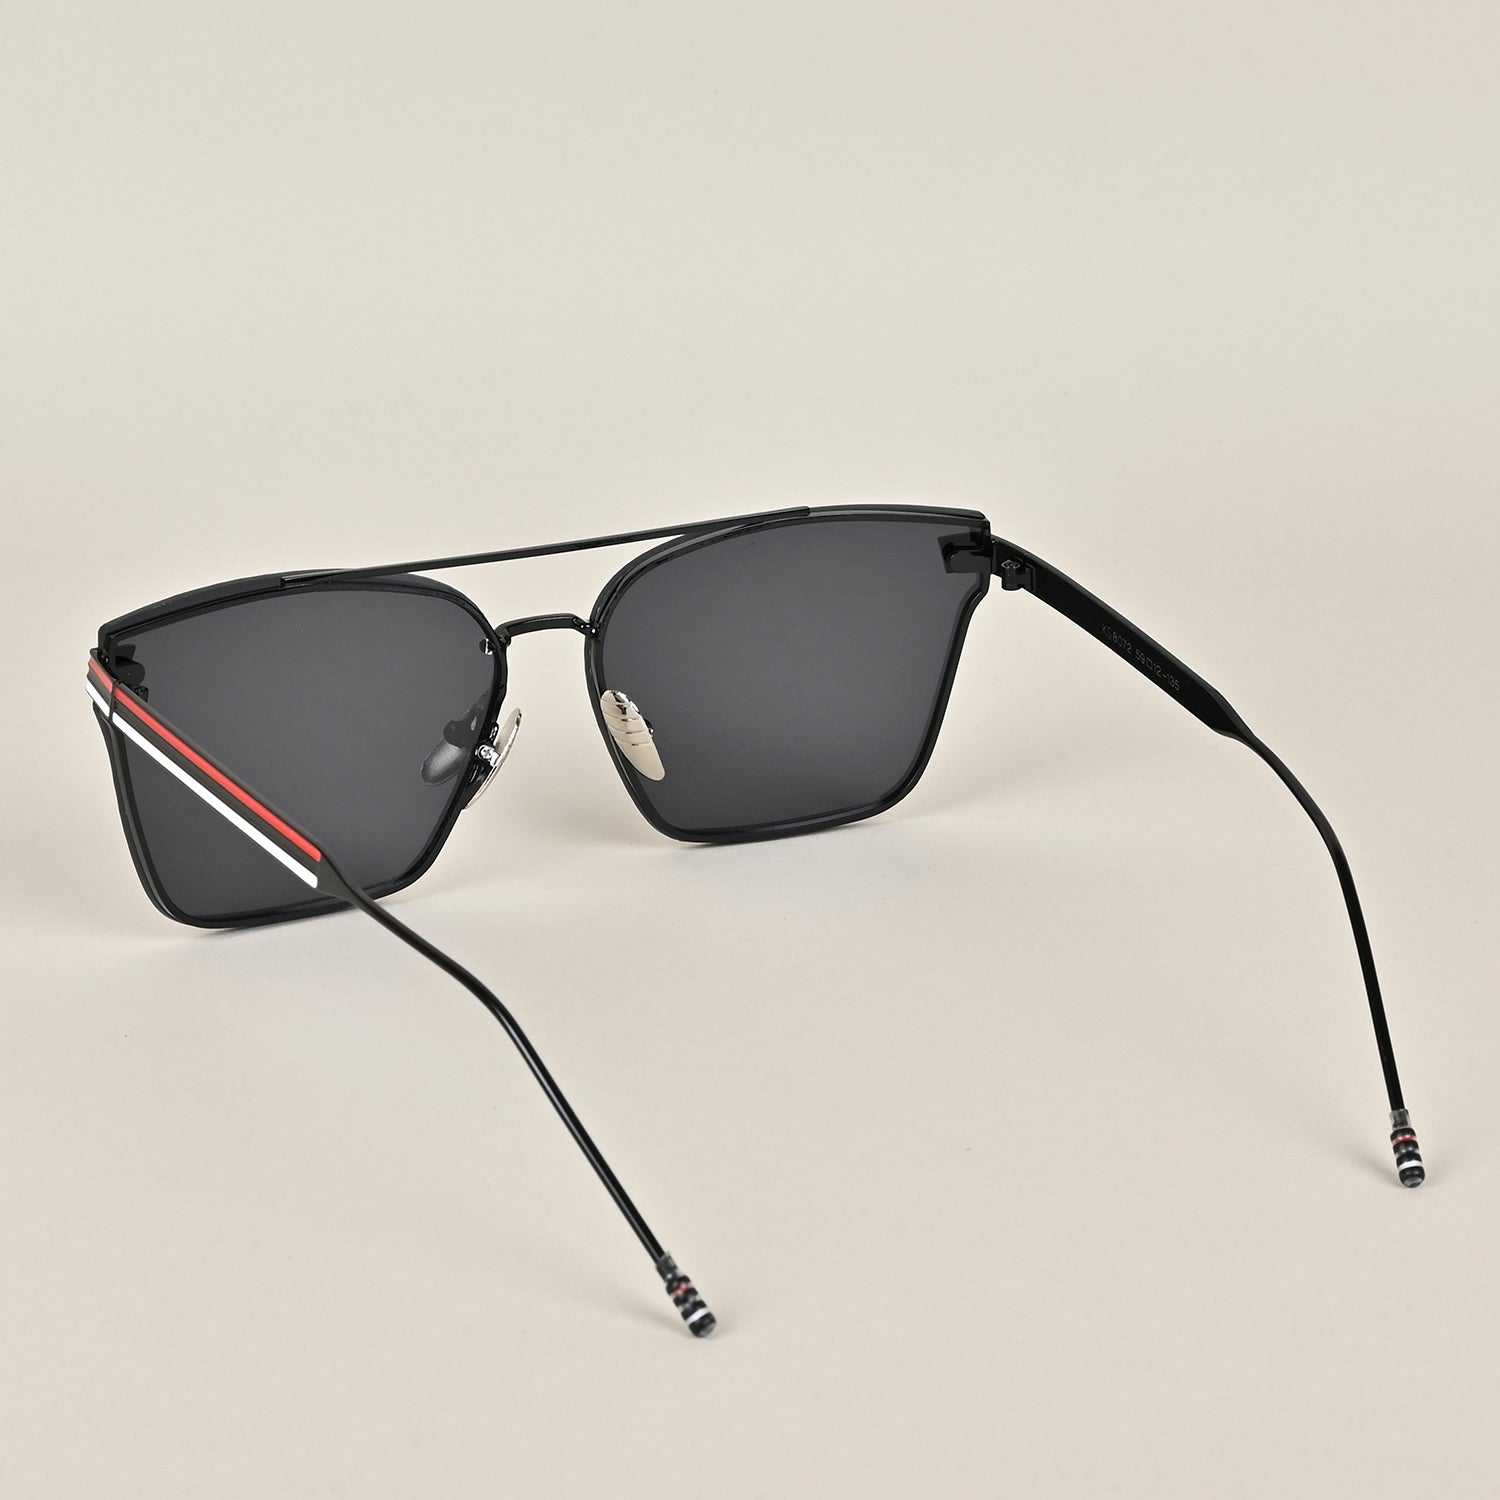 Voyage Wayfarer Black Sunglasses - MG2830